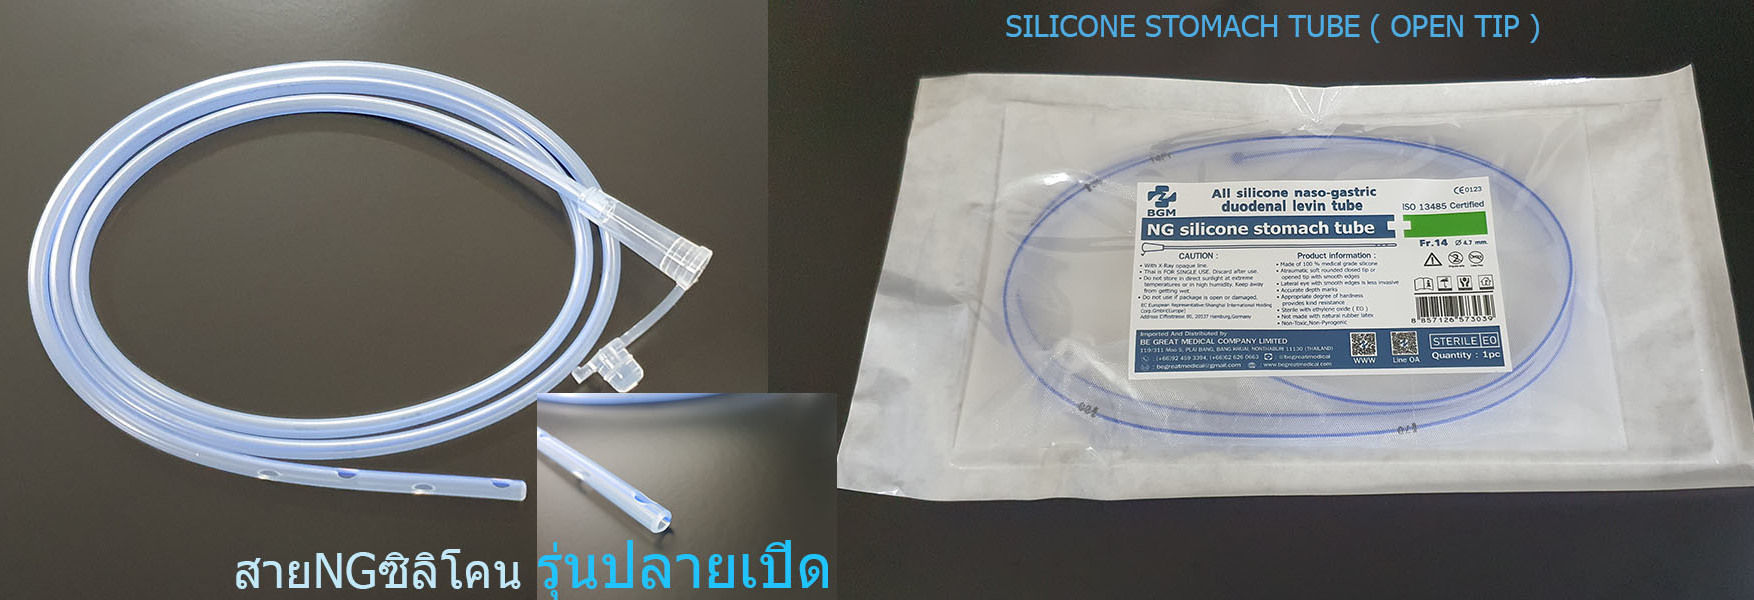 Silicone Stomach Tube ปลายเปิด